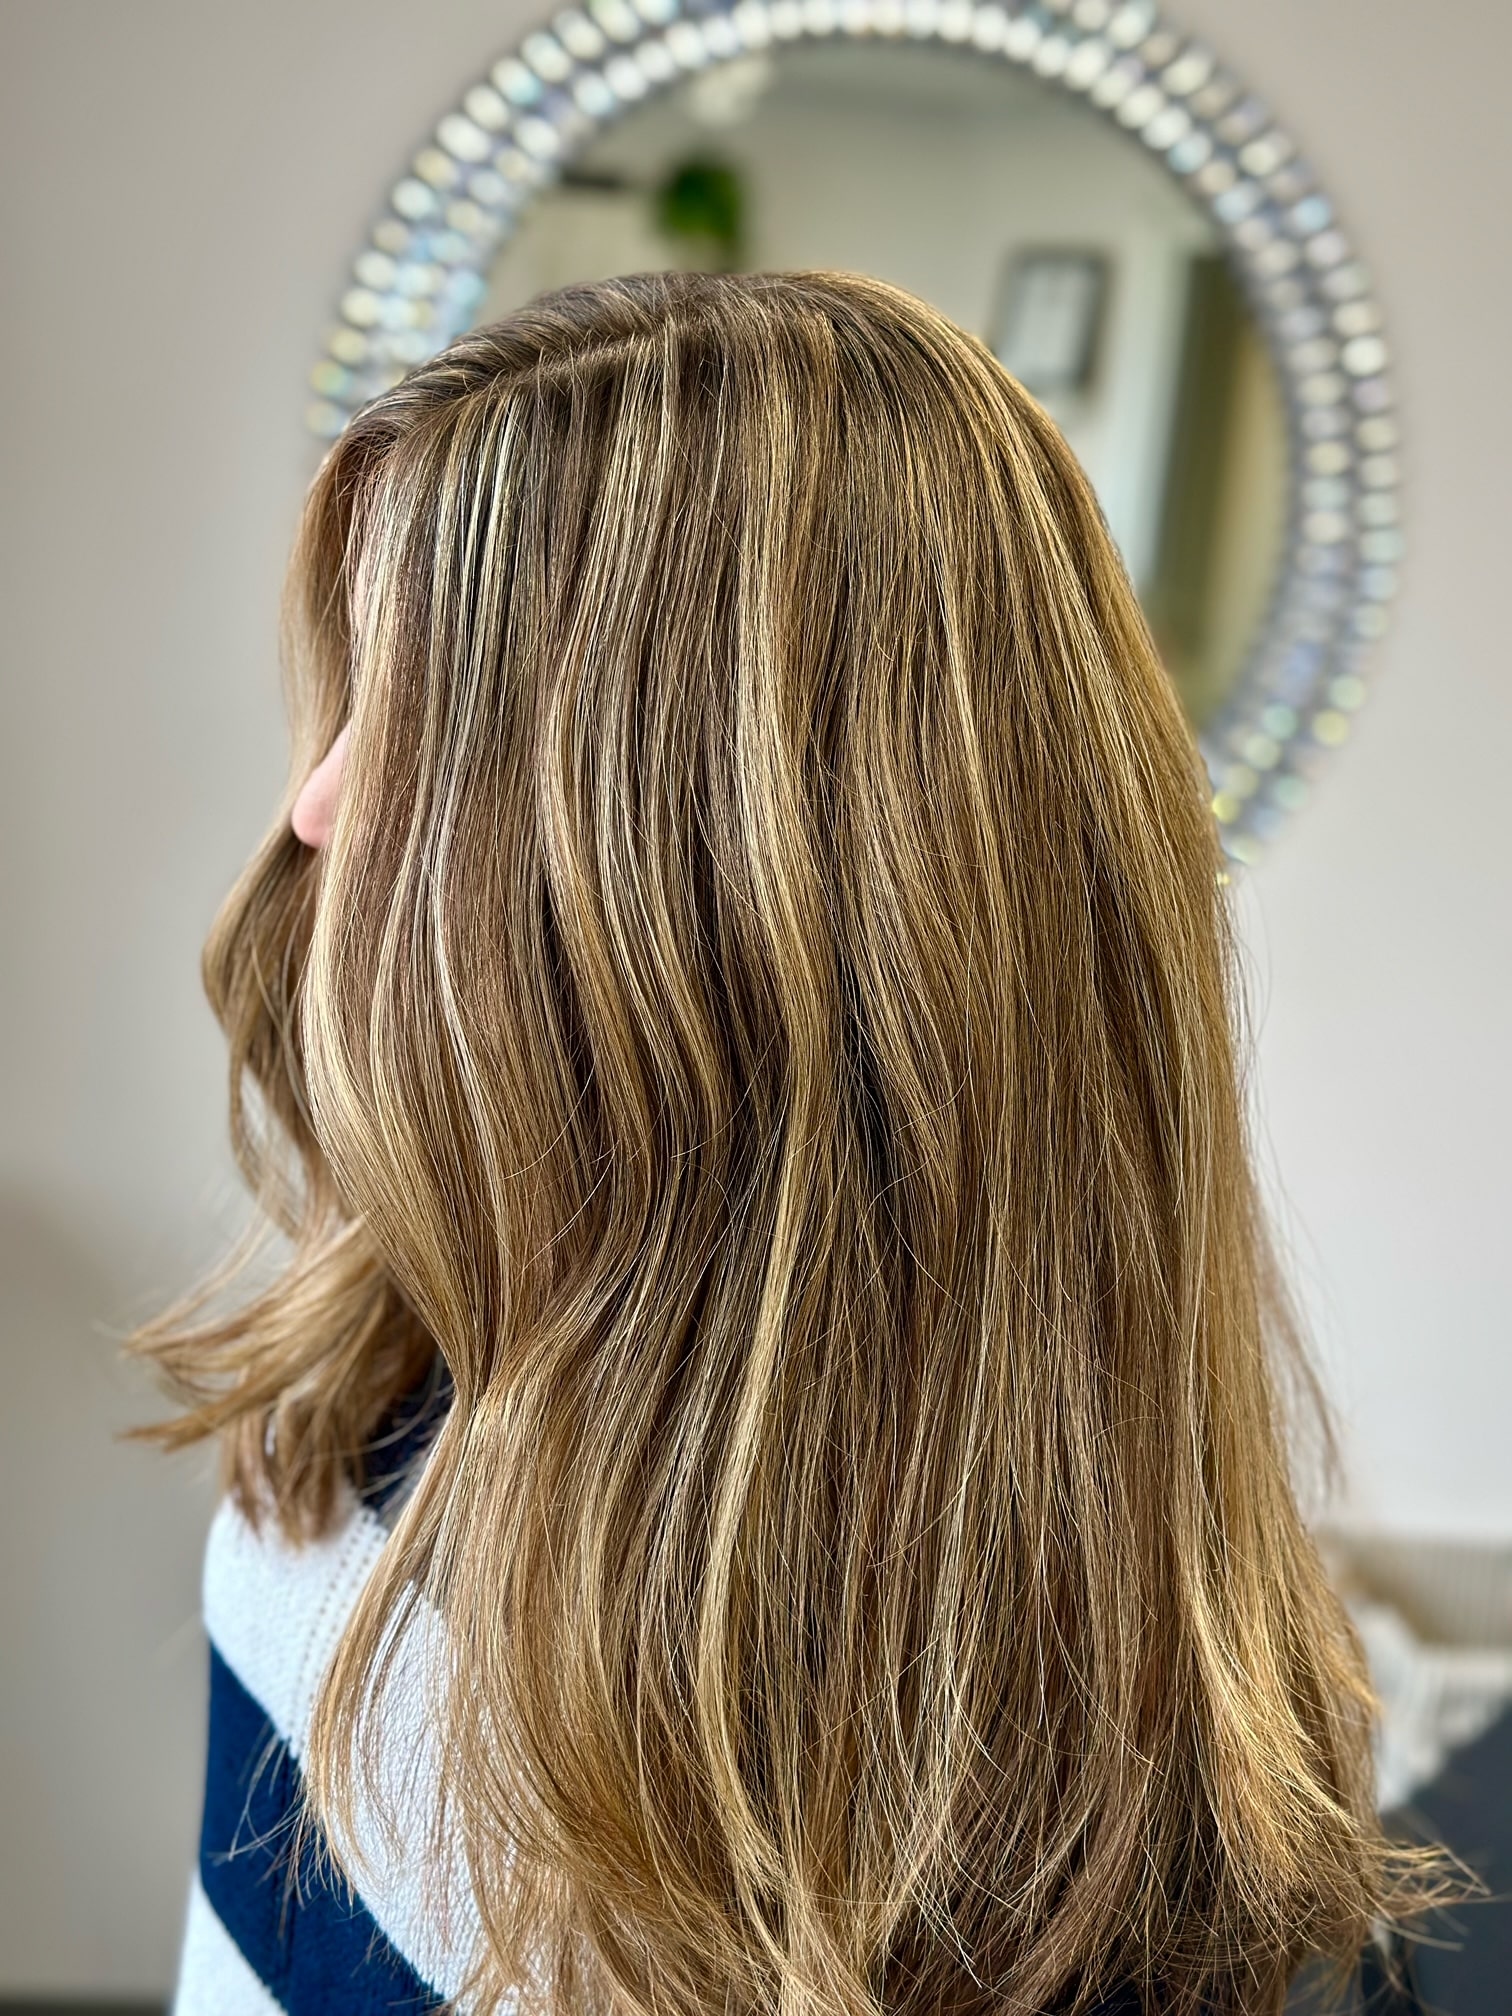 Highlights Hair Salon Service in Dedham MA by Hair By Marianne